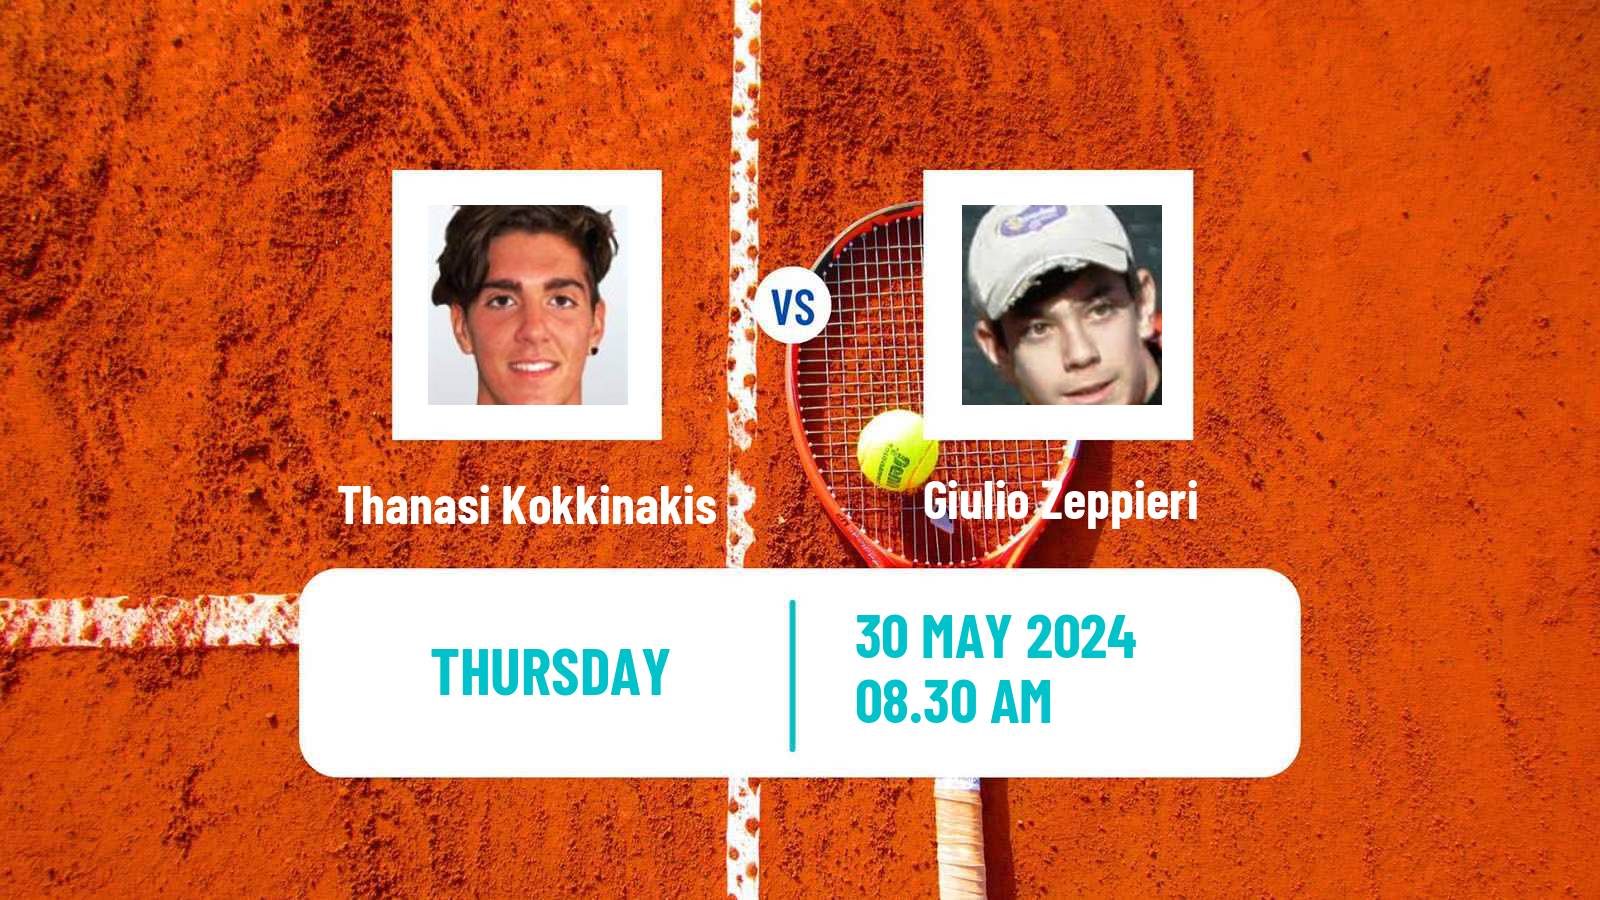 Tennis ATP Roland Garros Thanasi Kokkinakis - Giulio Zeppieri